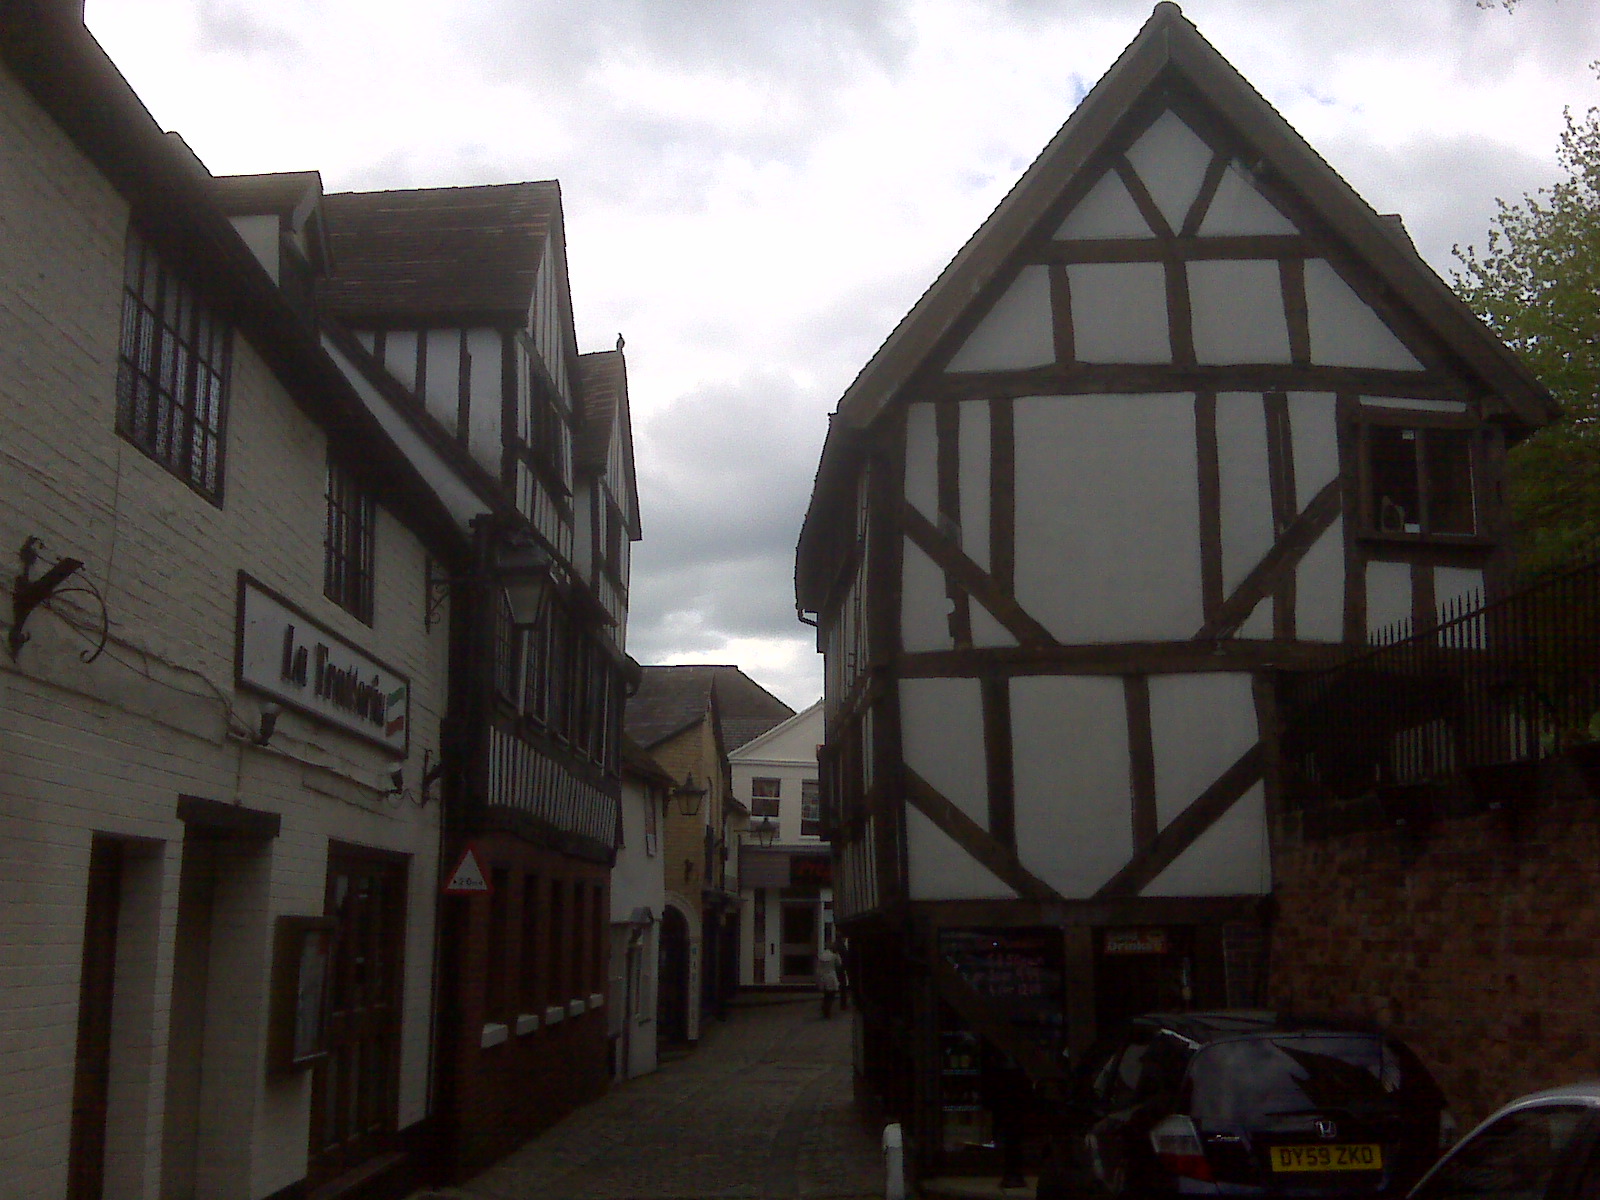 Fish Street, Shrewsbury